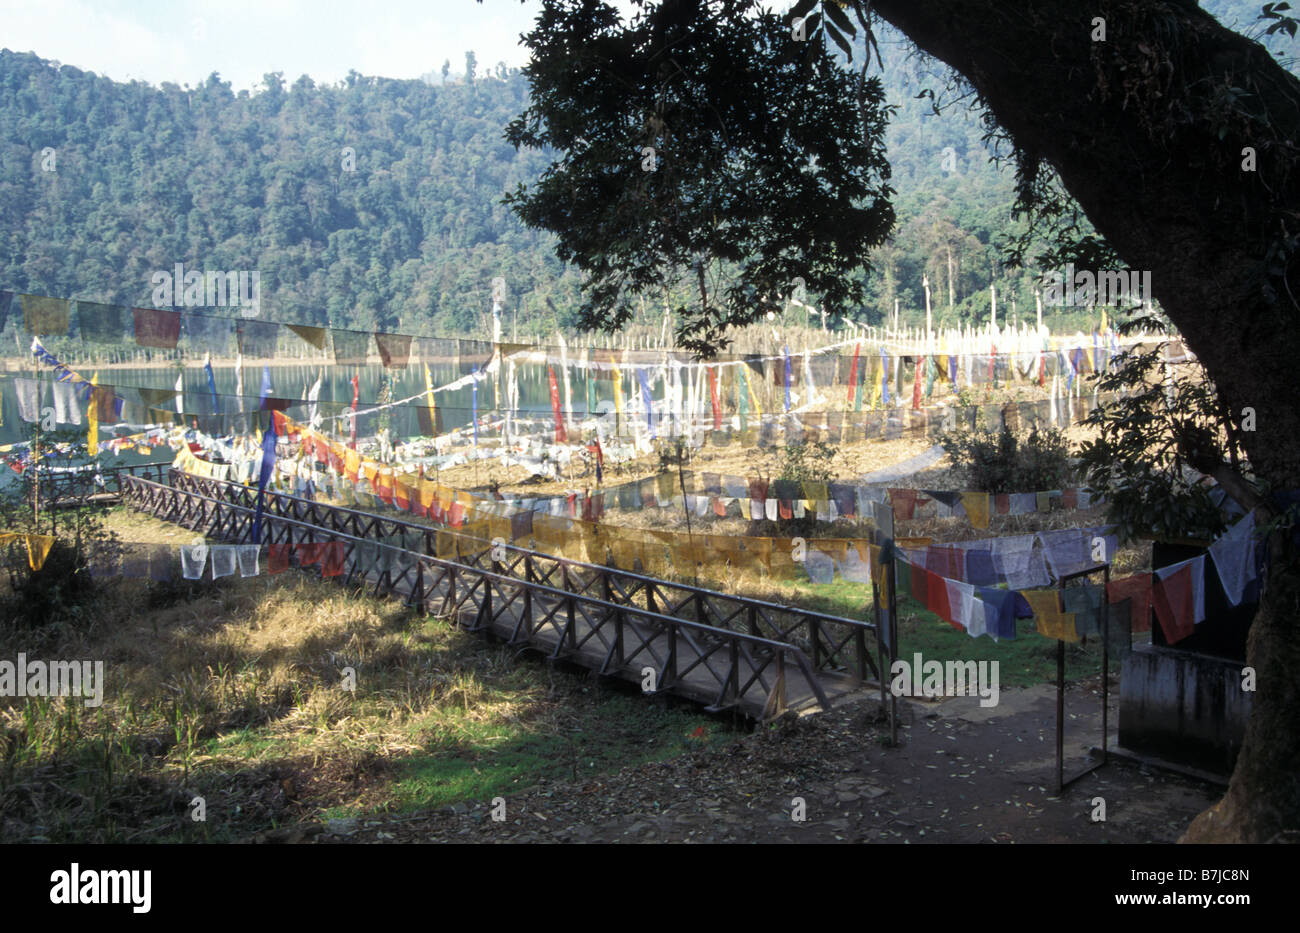 Sacra buddista sito pilgrimmage al lago Kacheoperi Sikkim India Foto Stock